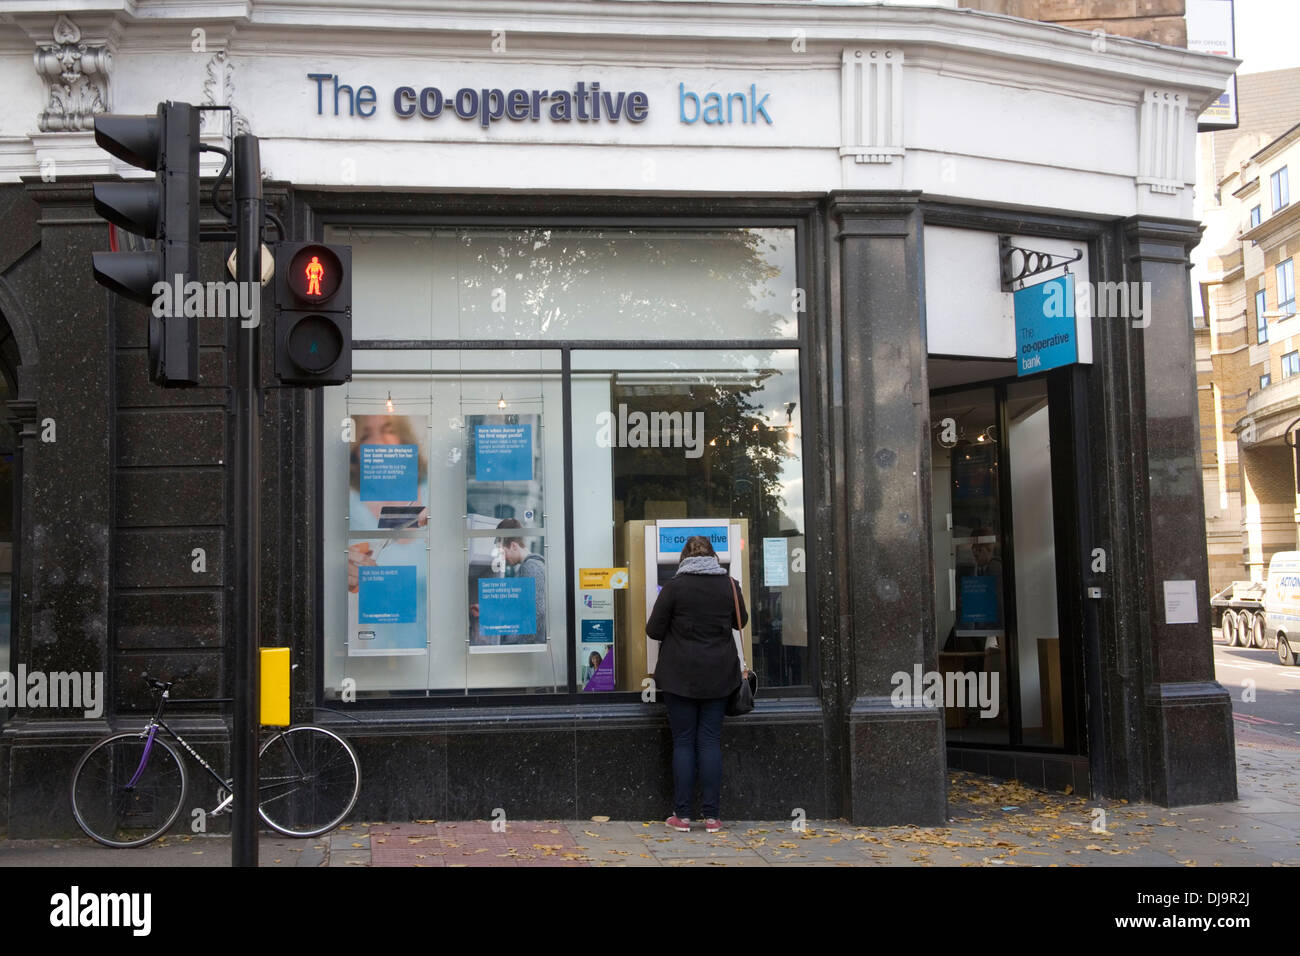 Co-operative bank branch on high street, Islington, London Stock Photo